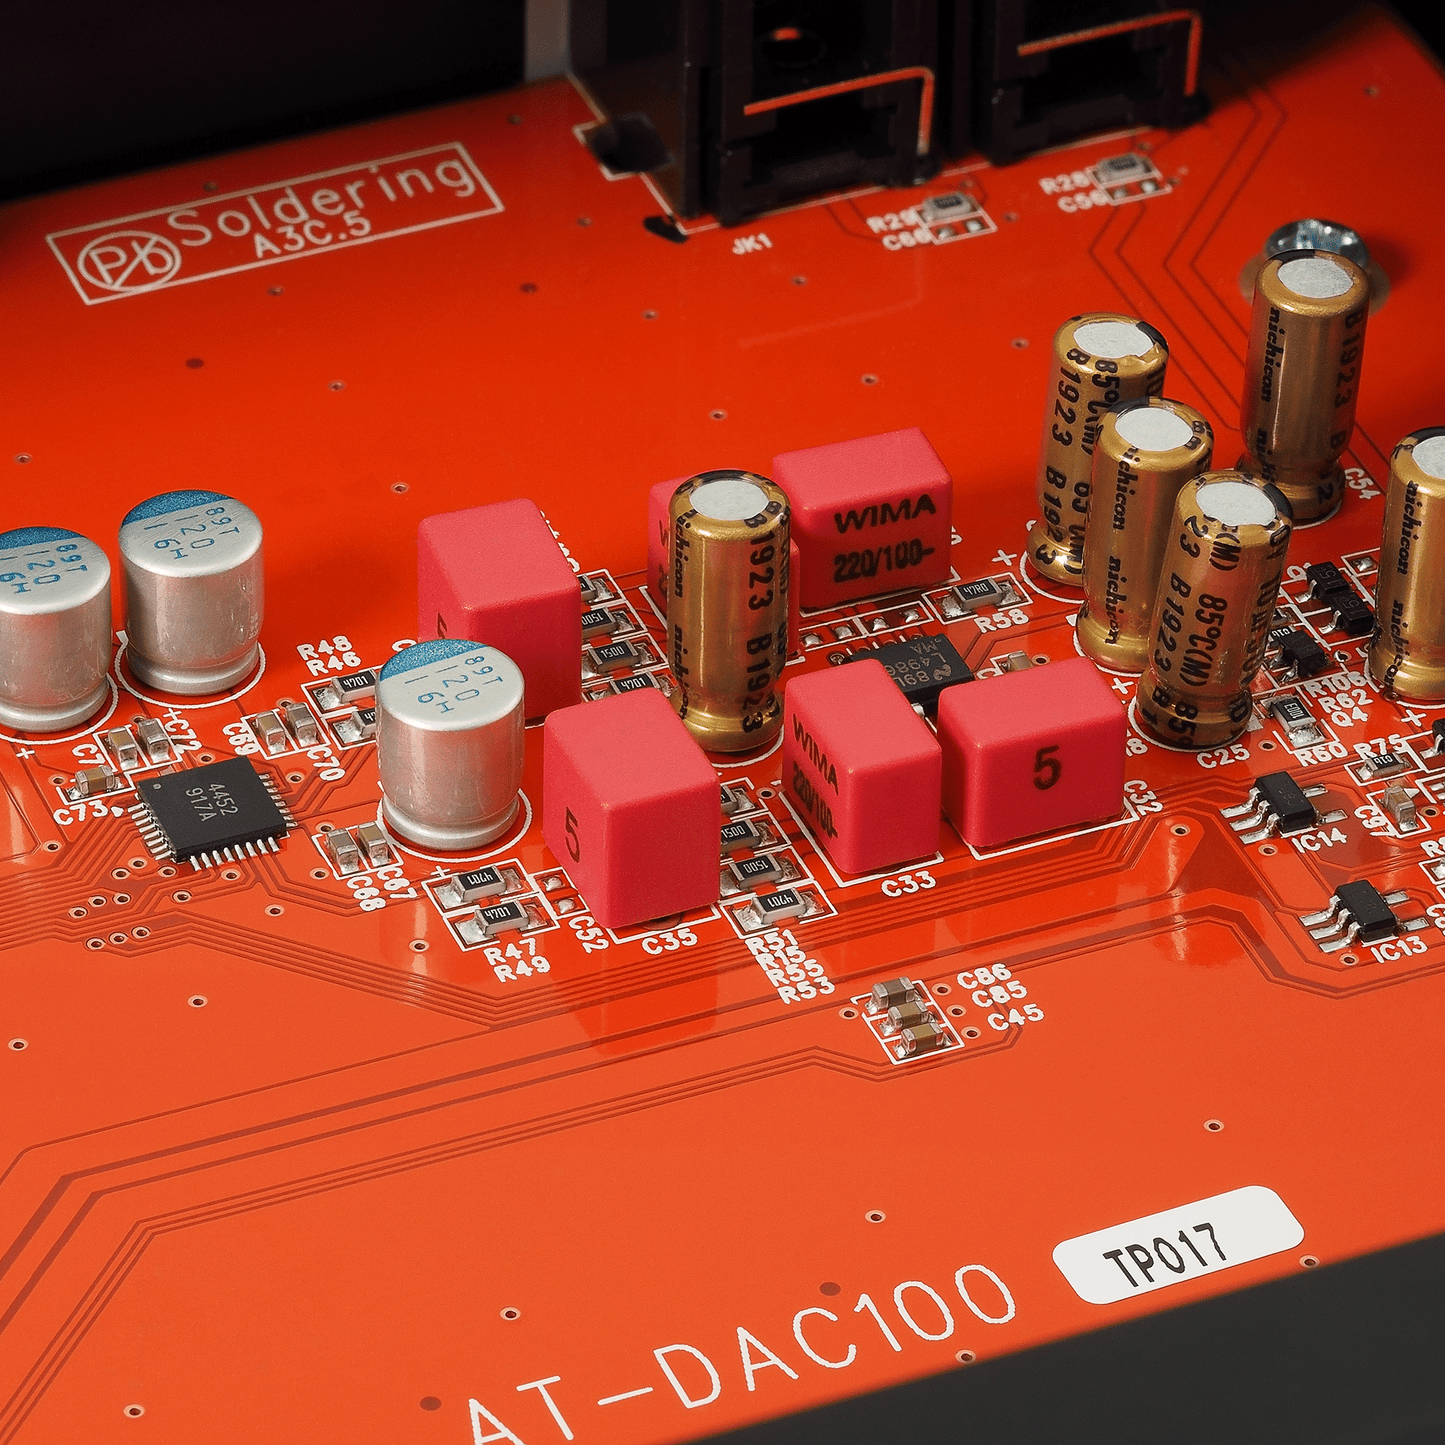 Audio-Technica AT-DAC100 Digital-To-Analog Converter